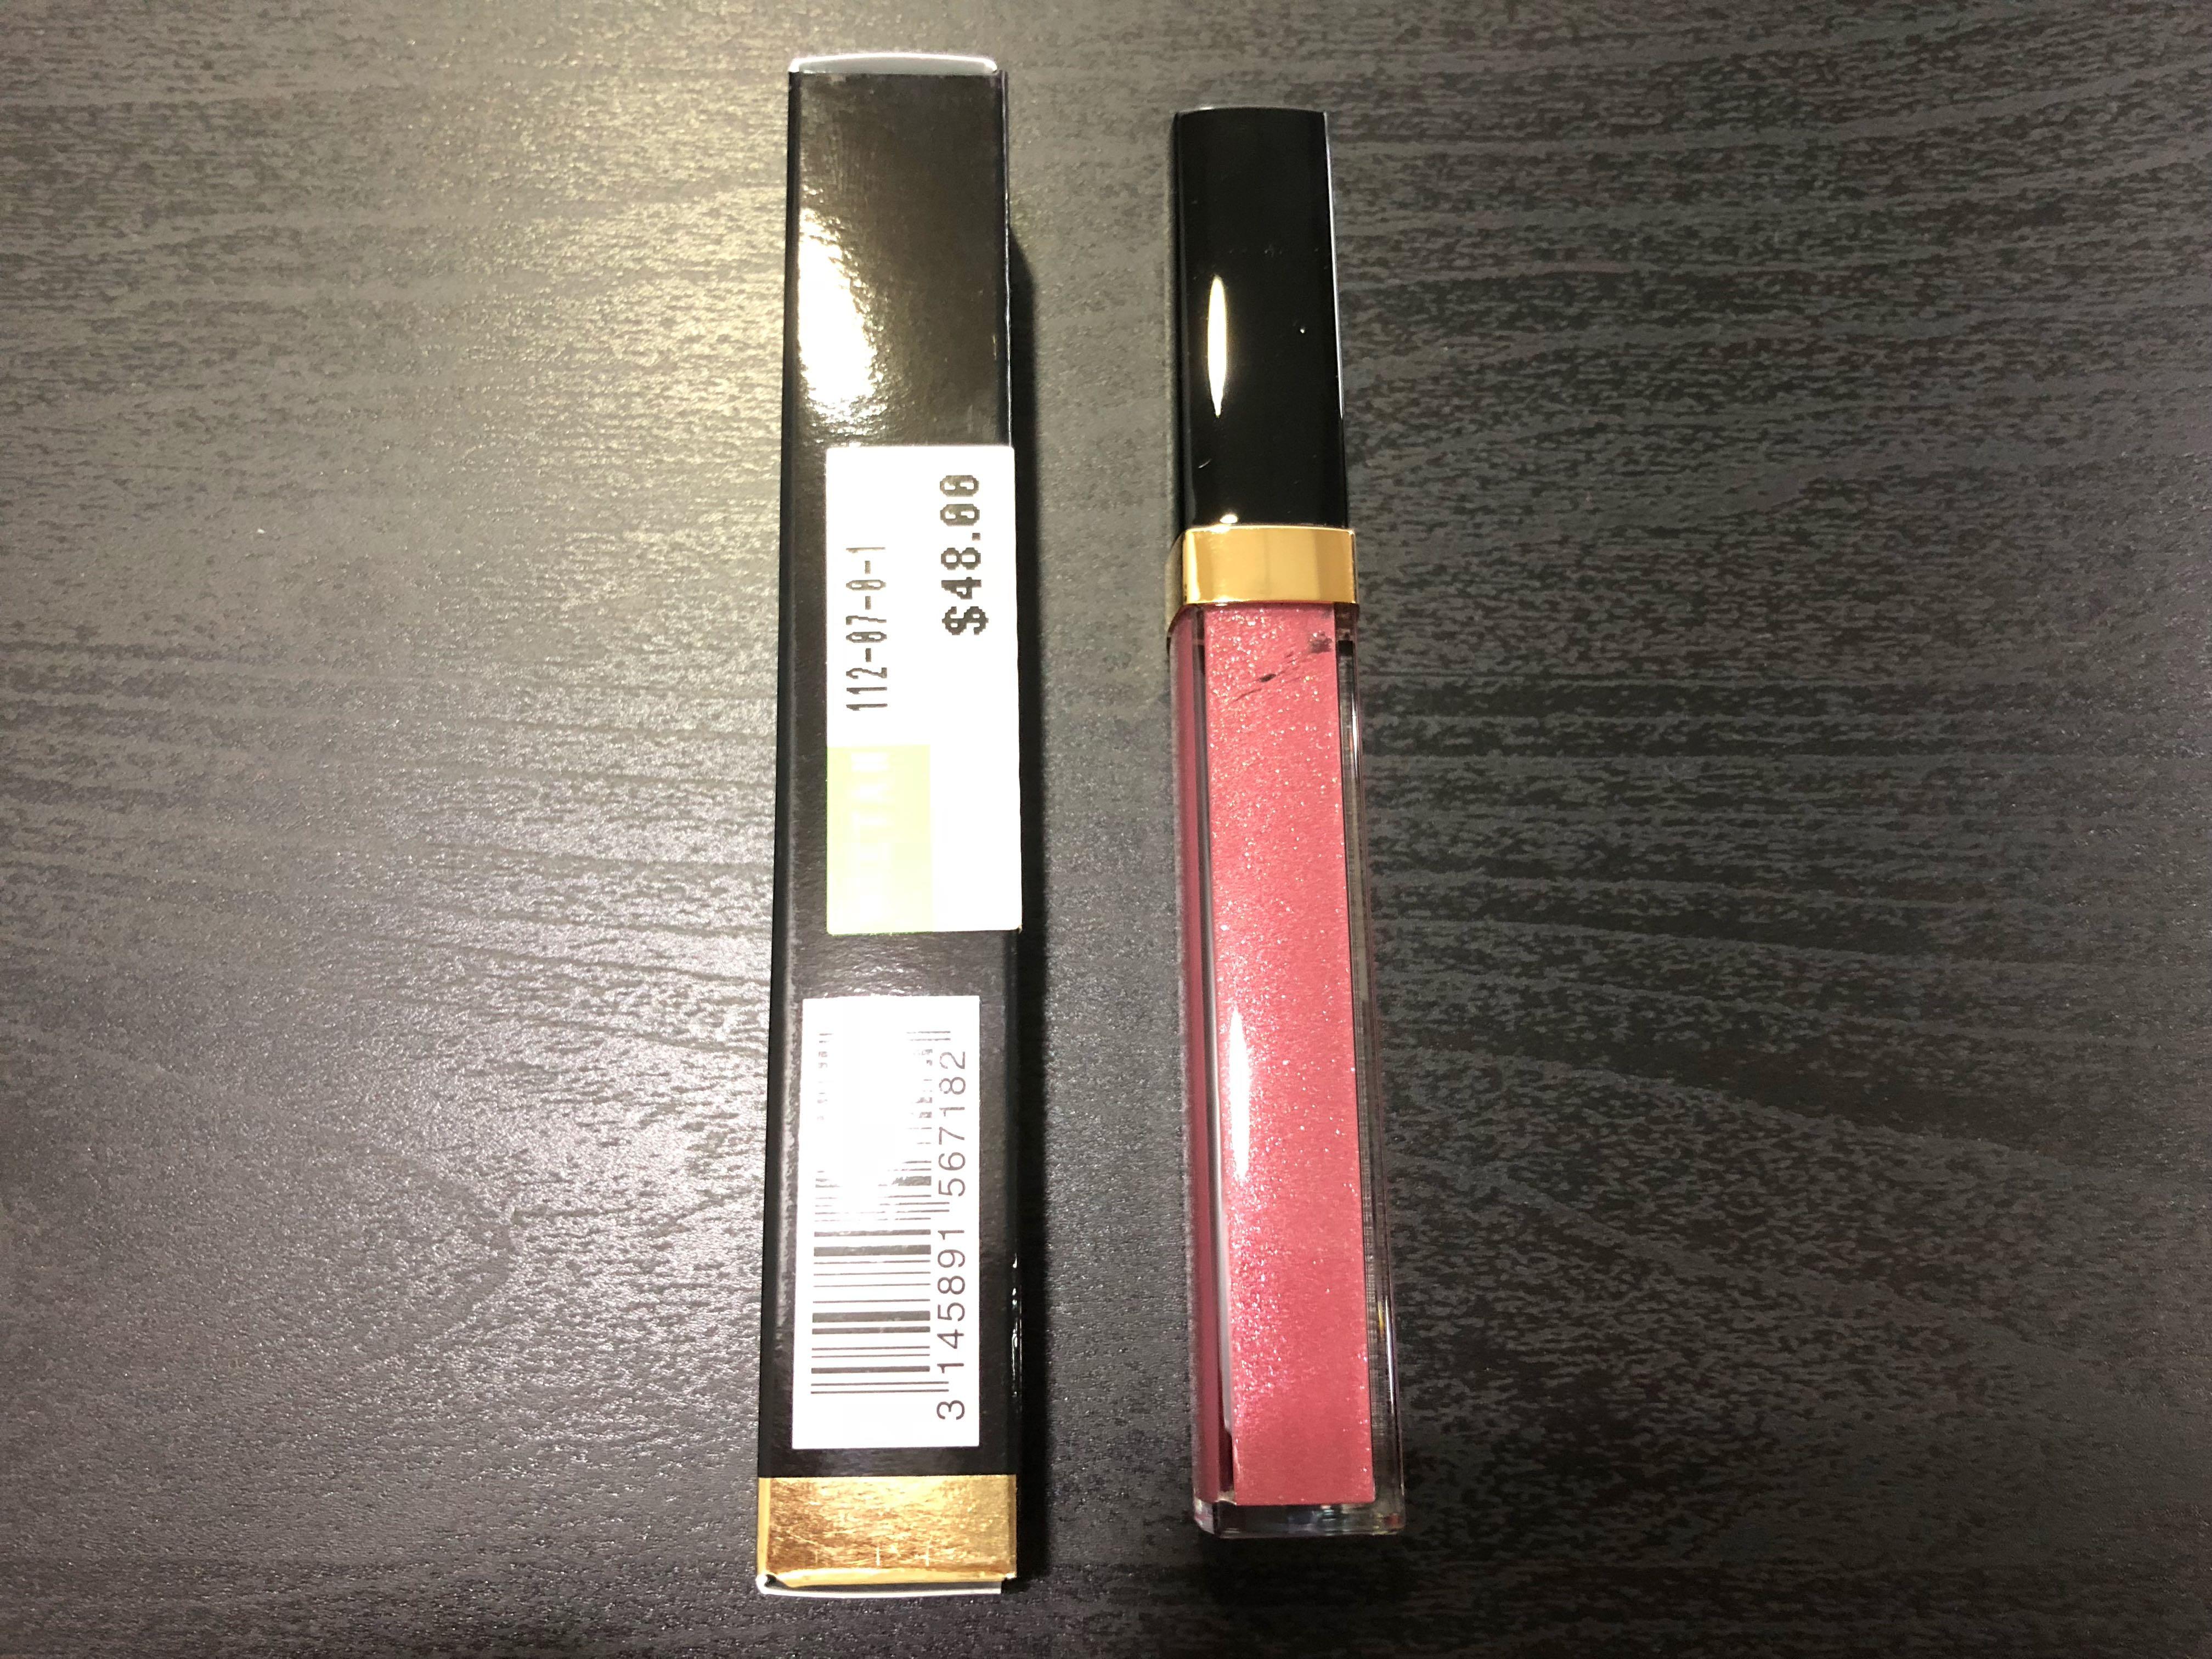 Chanel Rouge Coco Gloss Lip Gloss 119 Bourgeoisie Sample NEW